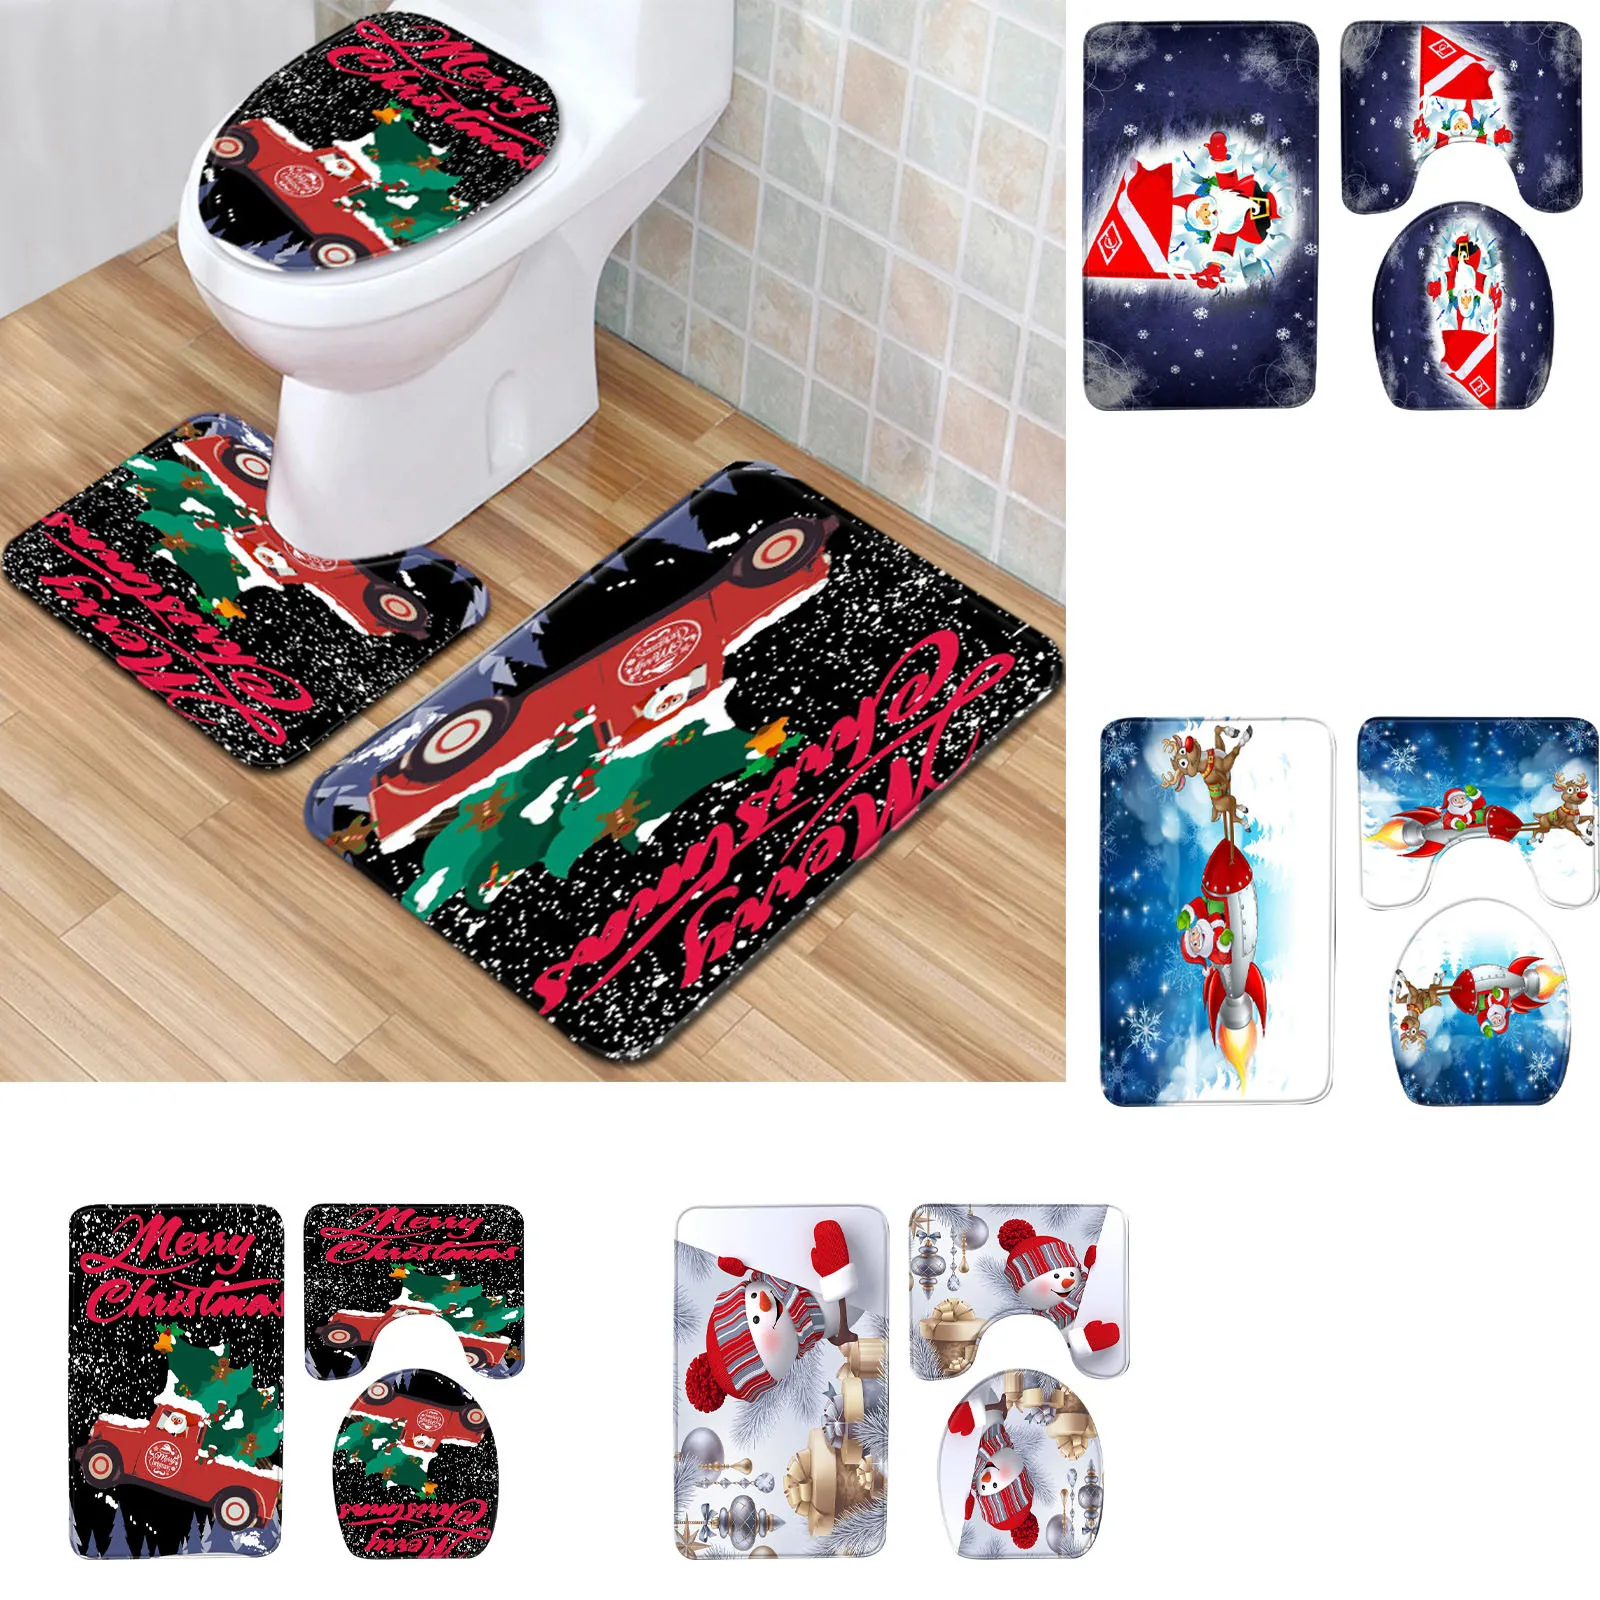 3Pcs Christmas Bathroom Non-Slip Floor Carpet Rug+Lid Toilet Cover+Bath Mat Set 